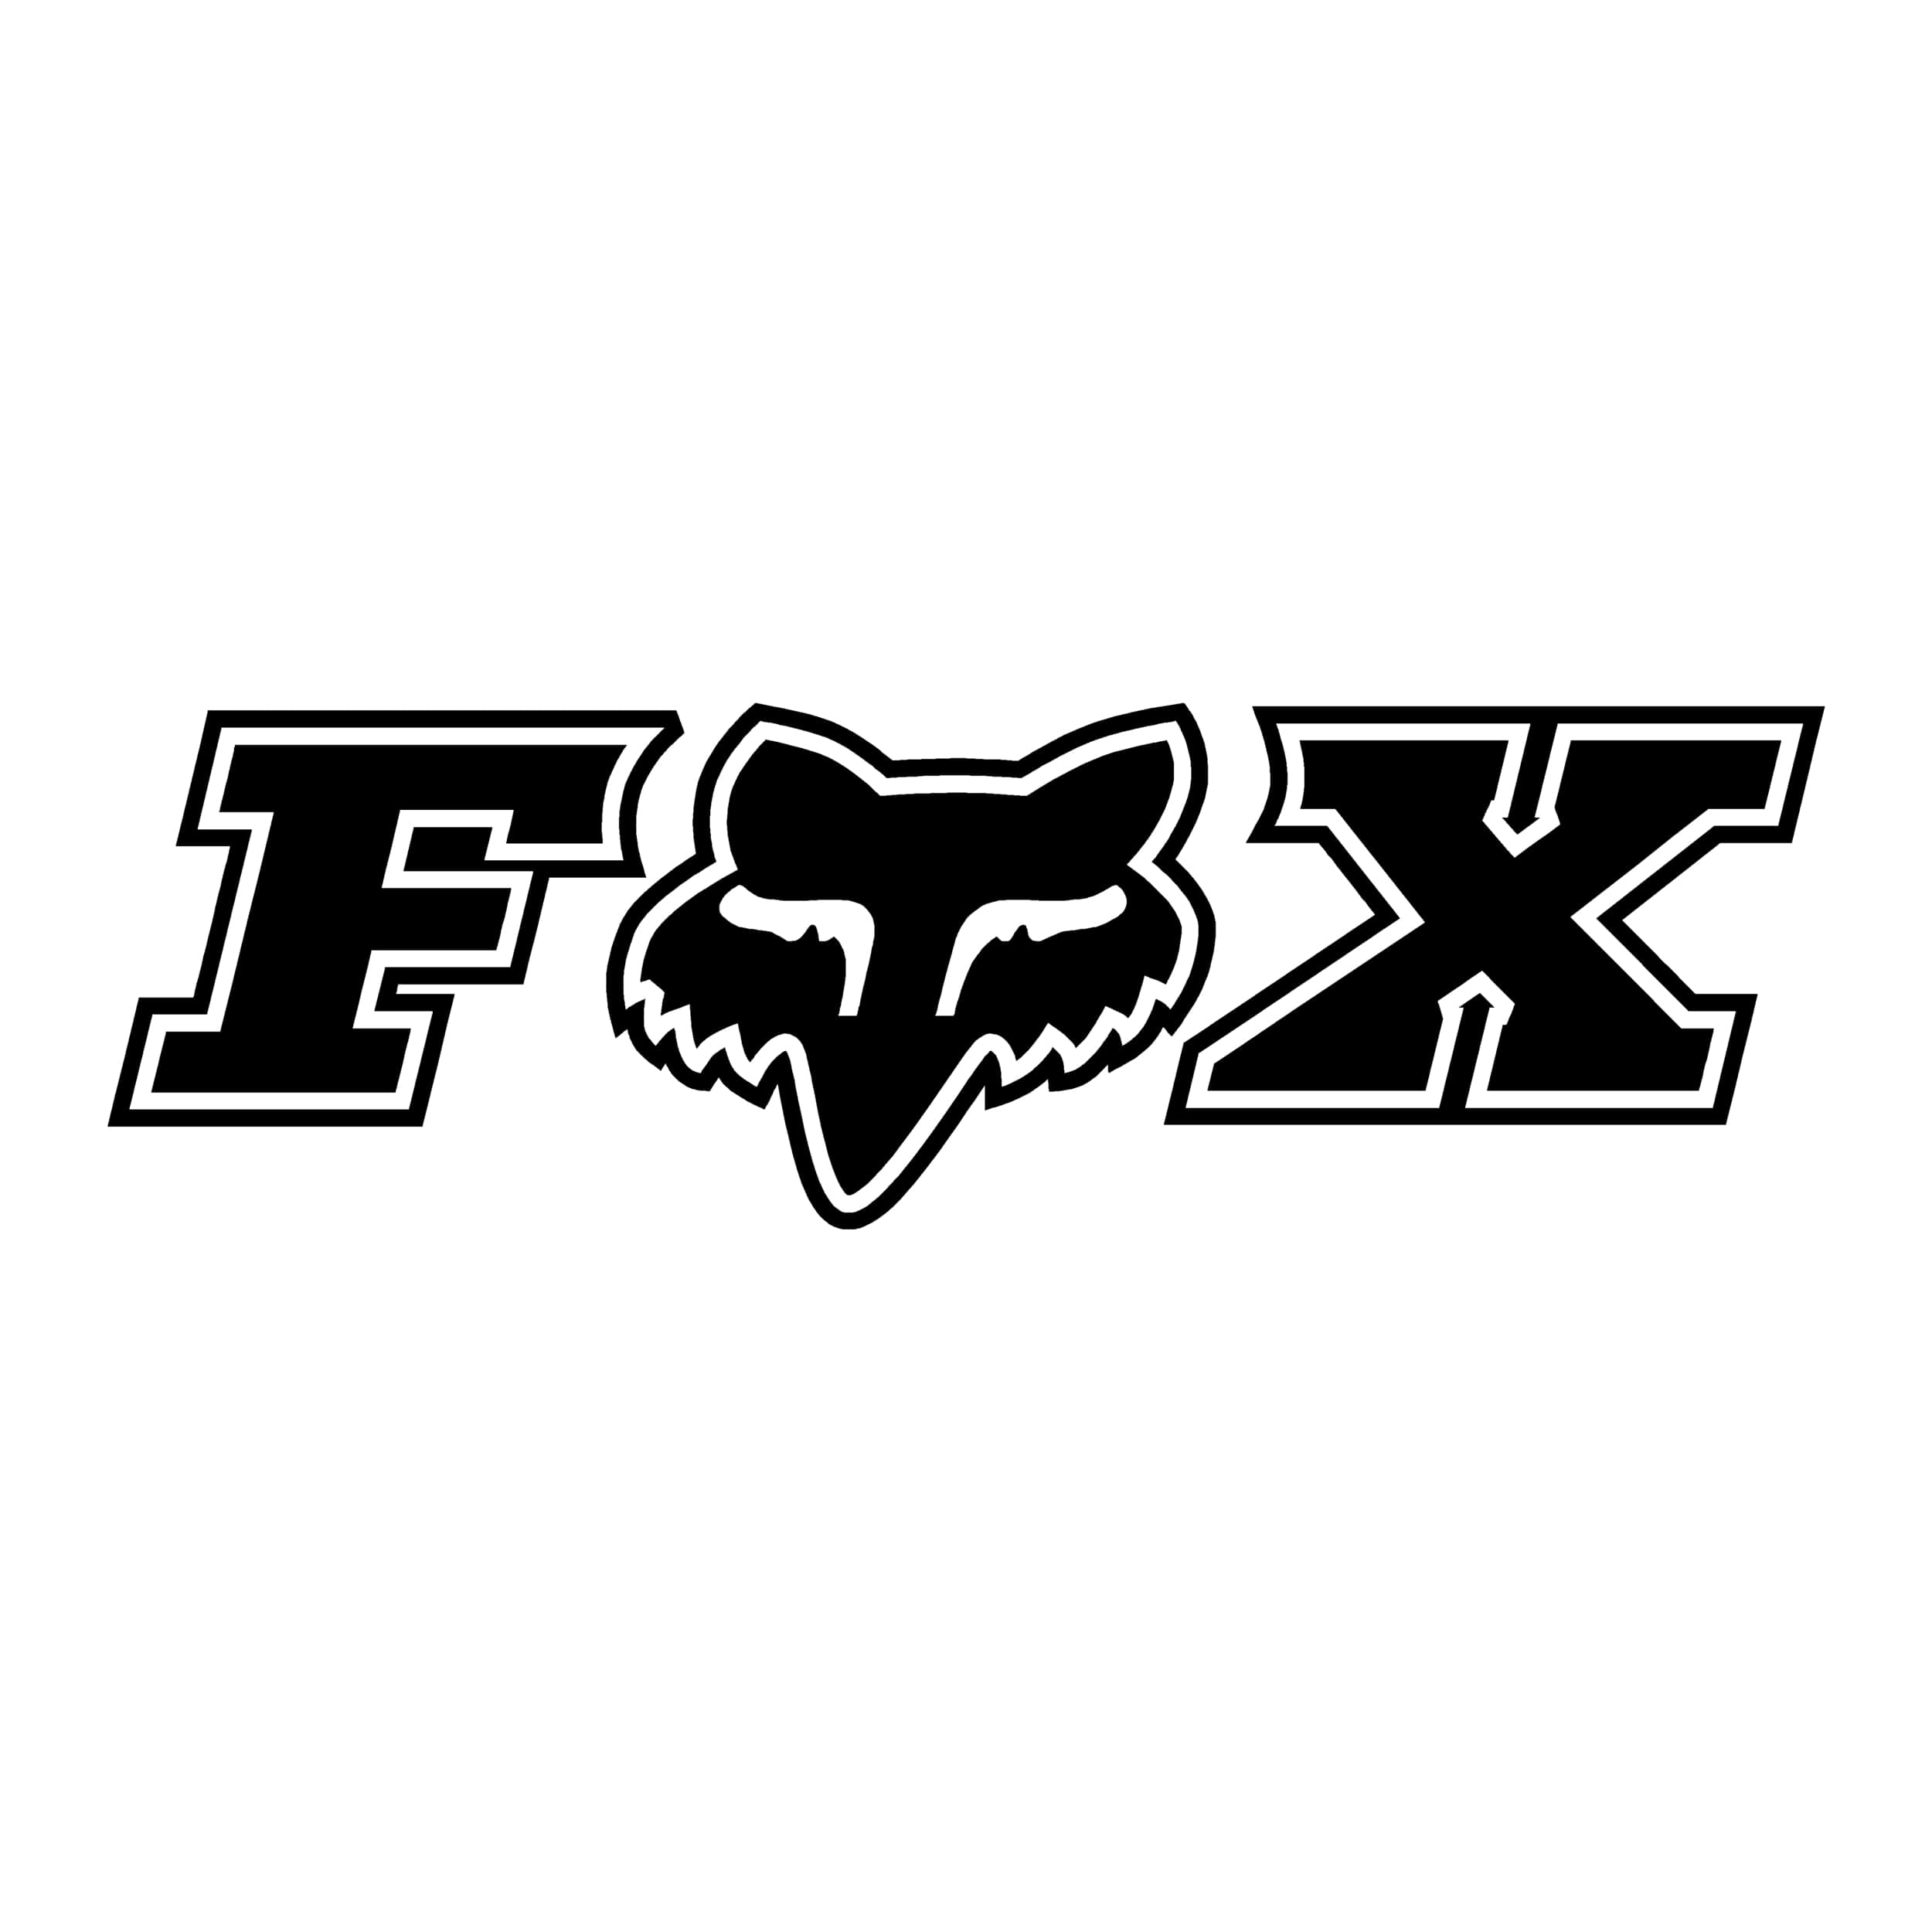 stickers-fox-ref1-tuning-sponsors-autocollant-sticker-velo-bike-auto-moto-4x4-camion-competition-deco-rallye-min